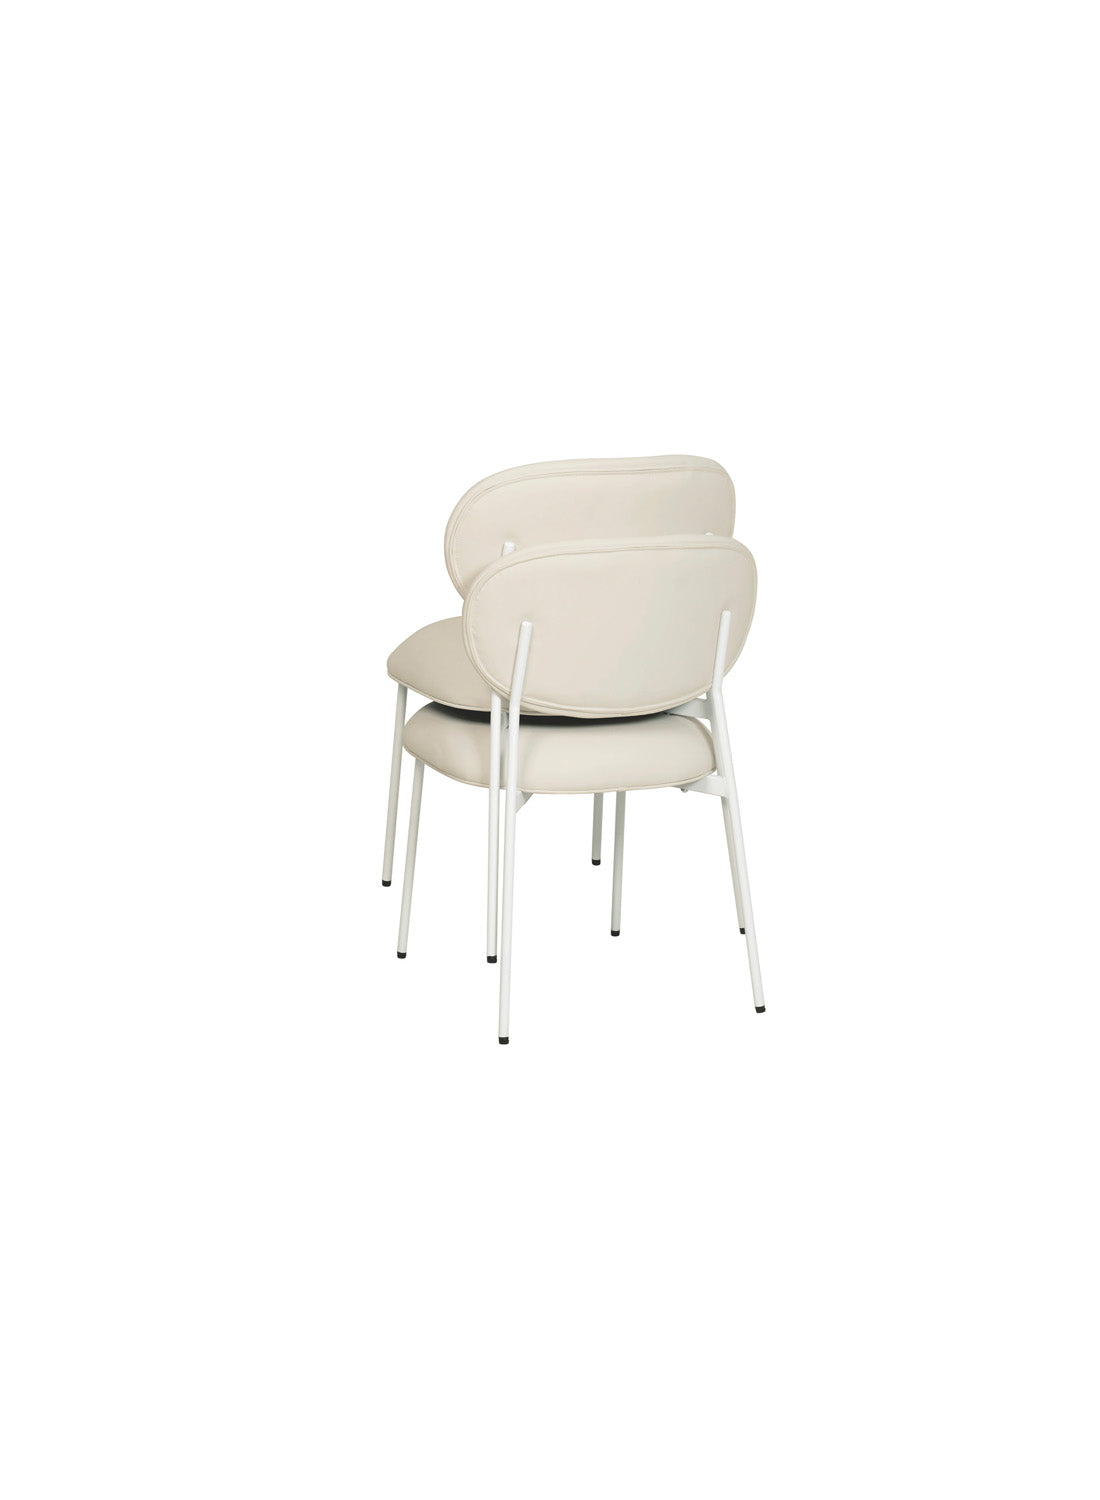 Grayson Dining Chair Set of 2, cream legs